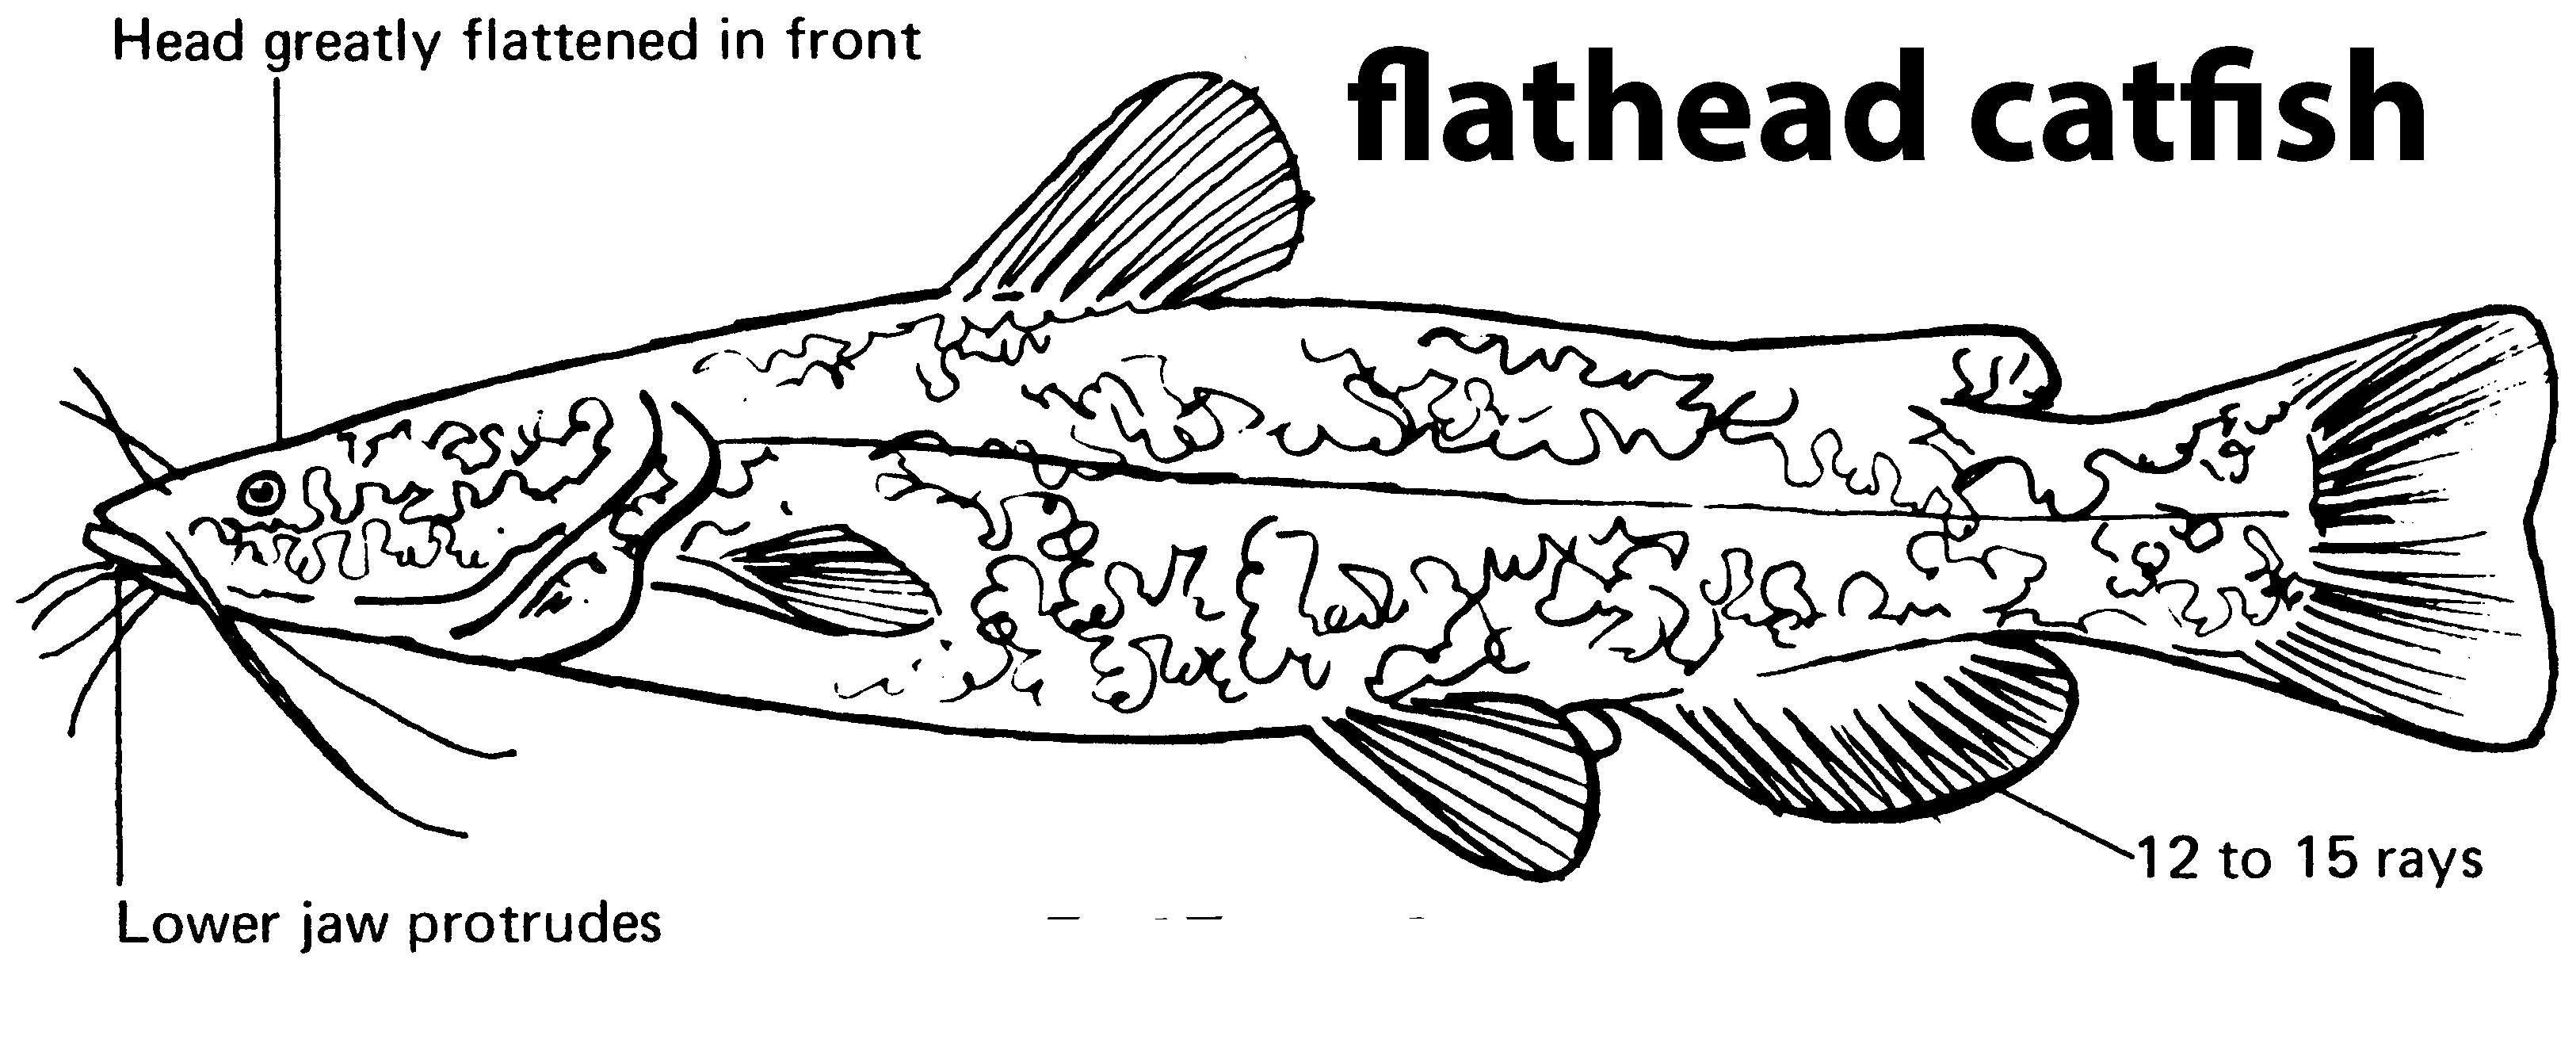 characteristics of a flathead catfish